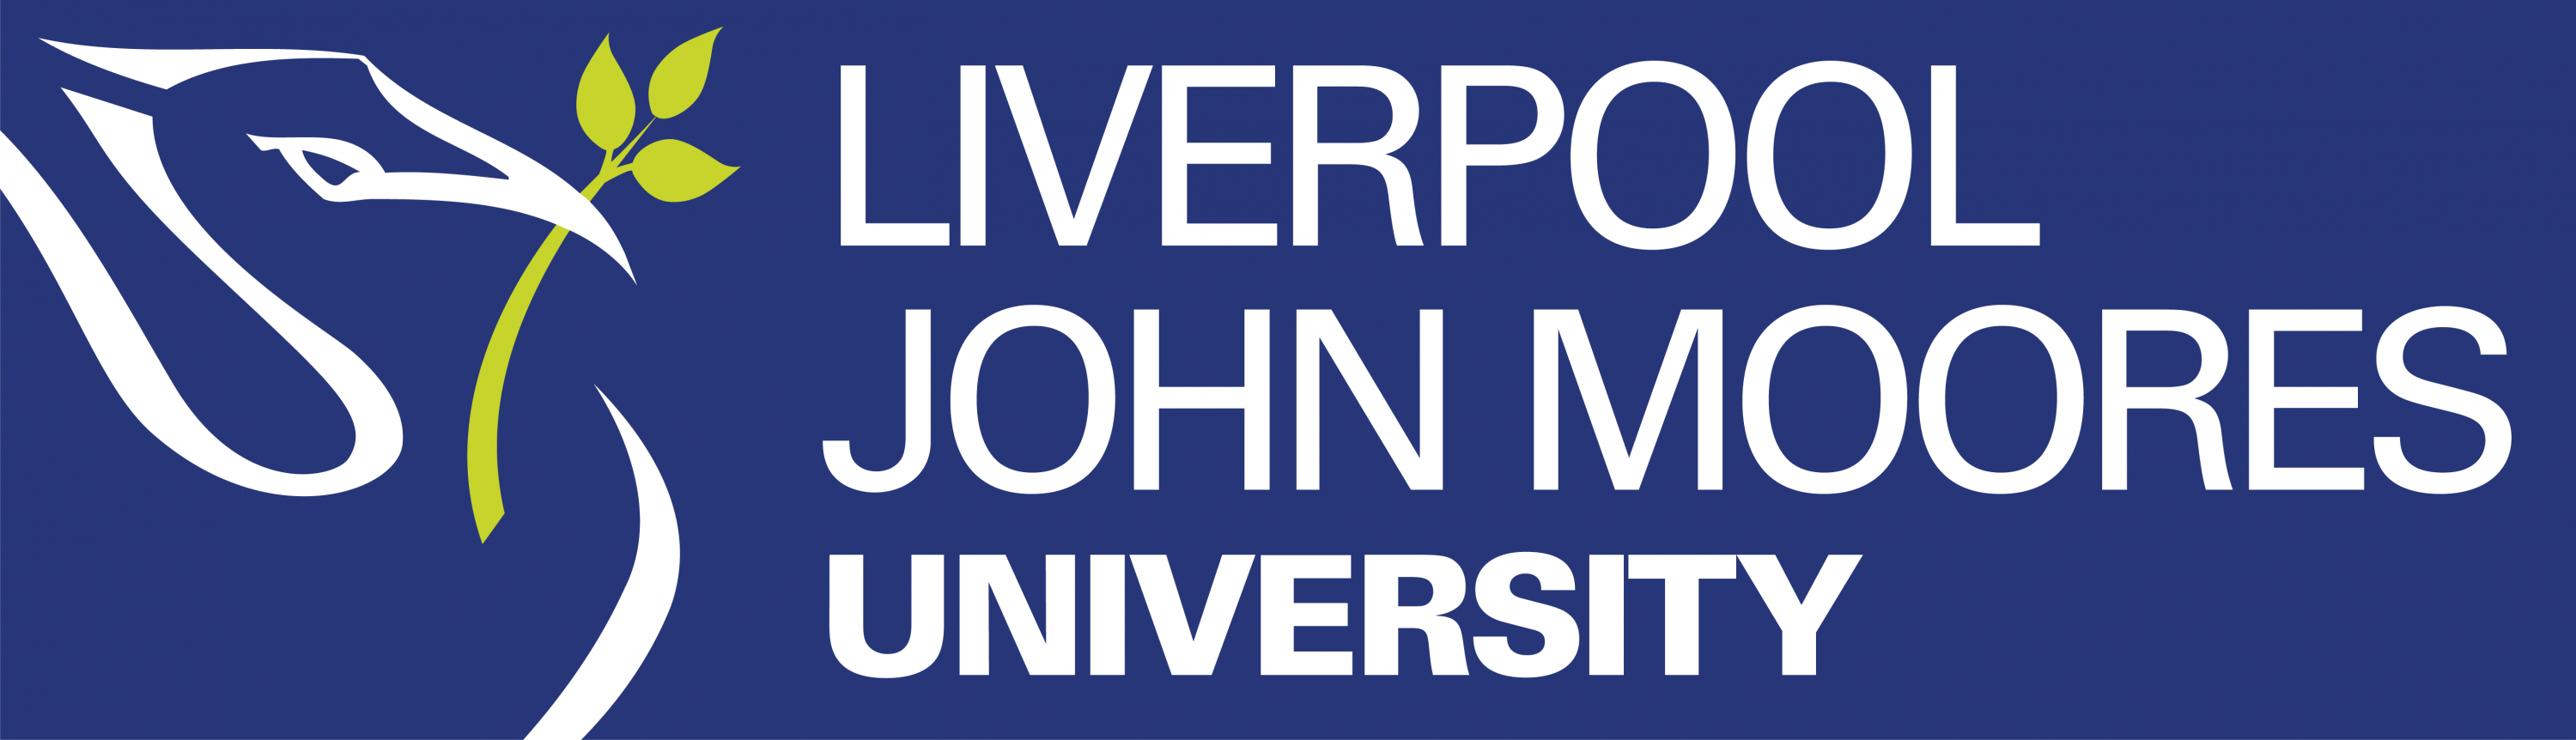 liverpool john moores university personal statement